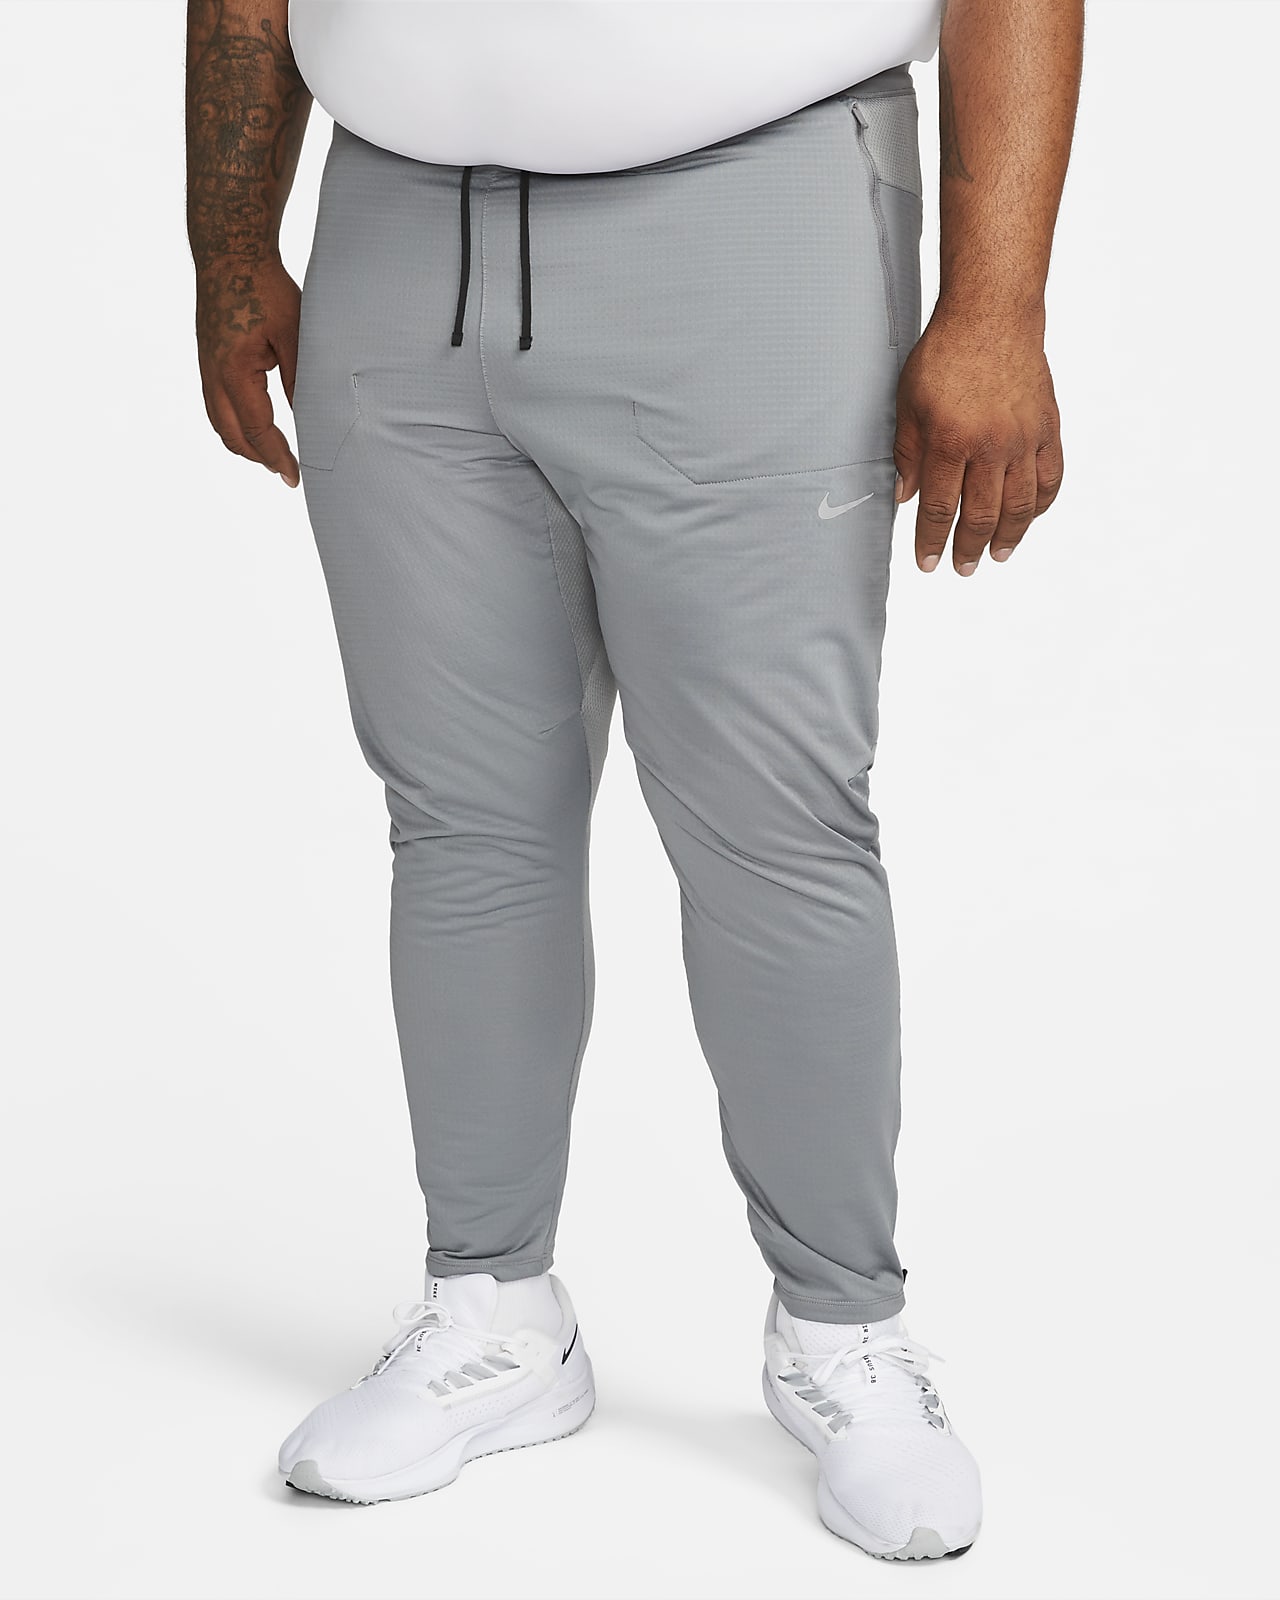 Nike Dri-Fit Phenom Elite Knit Running Pants Black DQ4740-010 Men’s